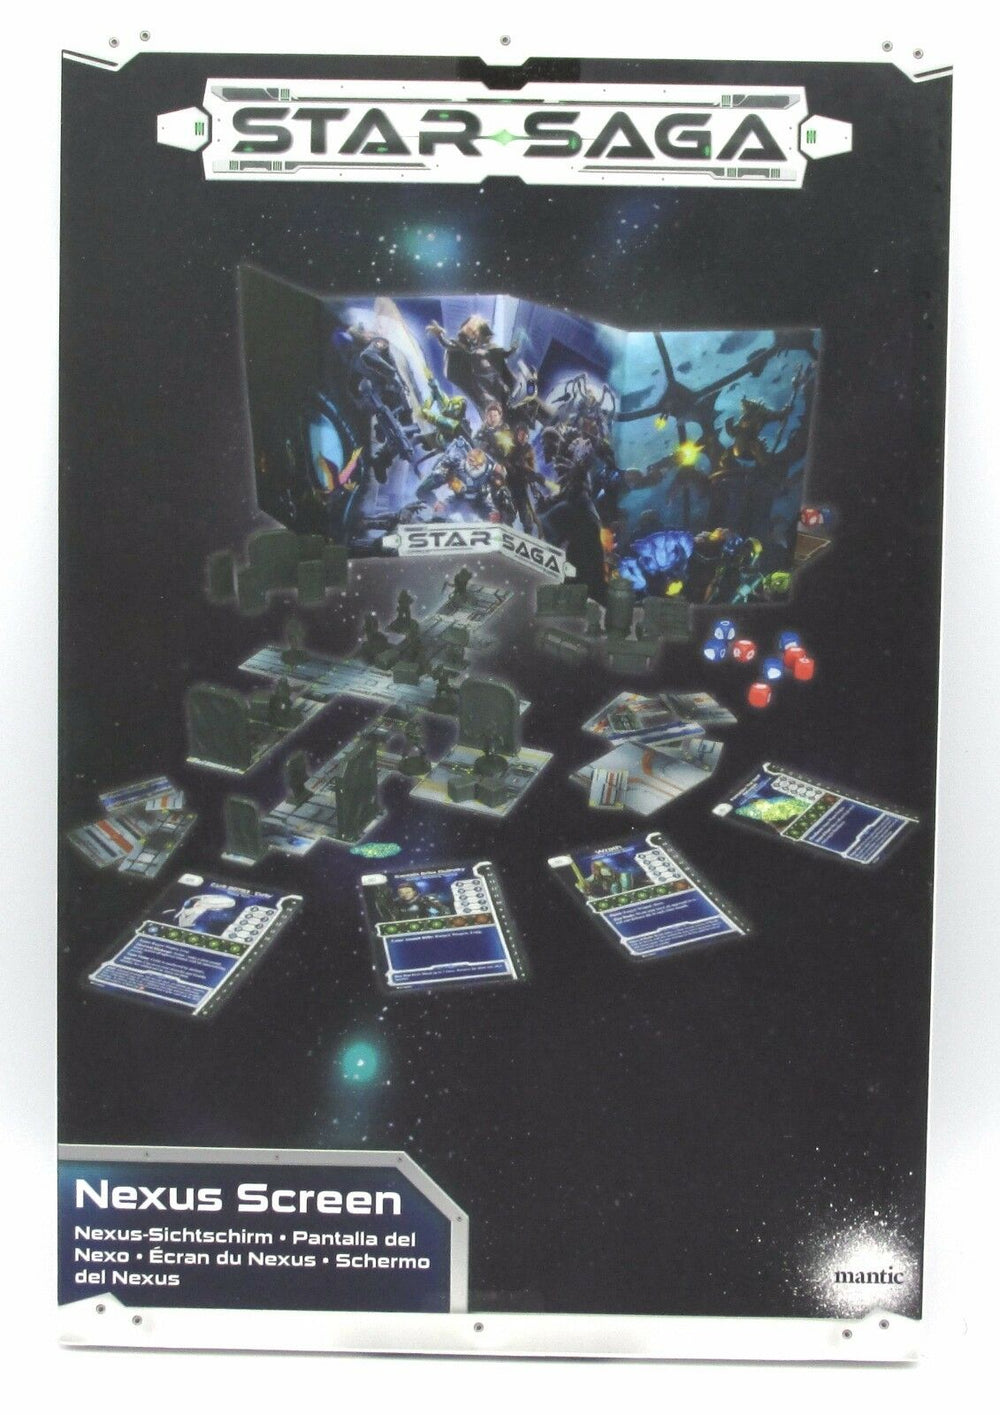 Star saga Nexus Screen